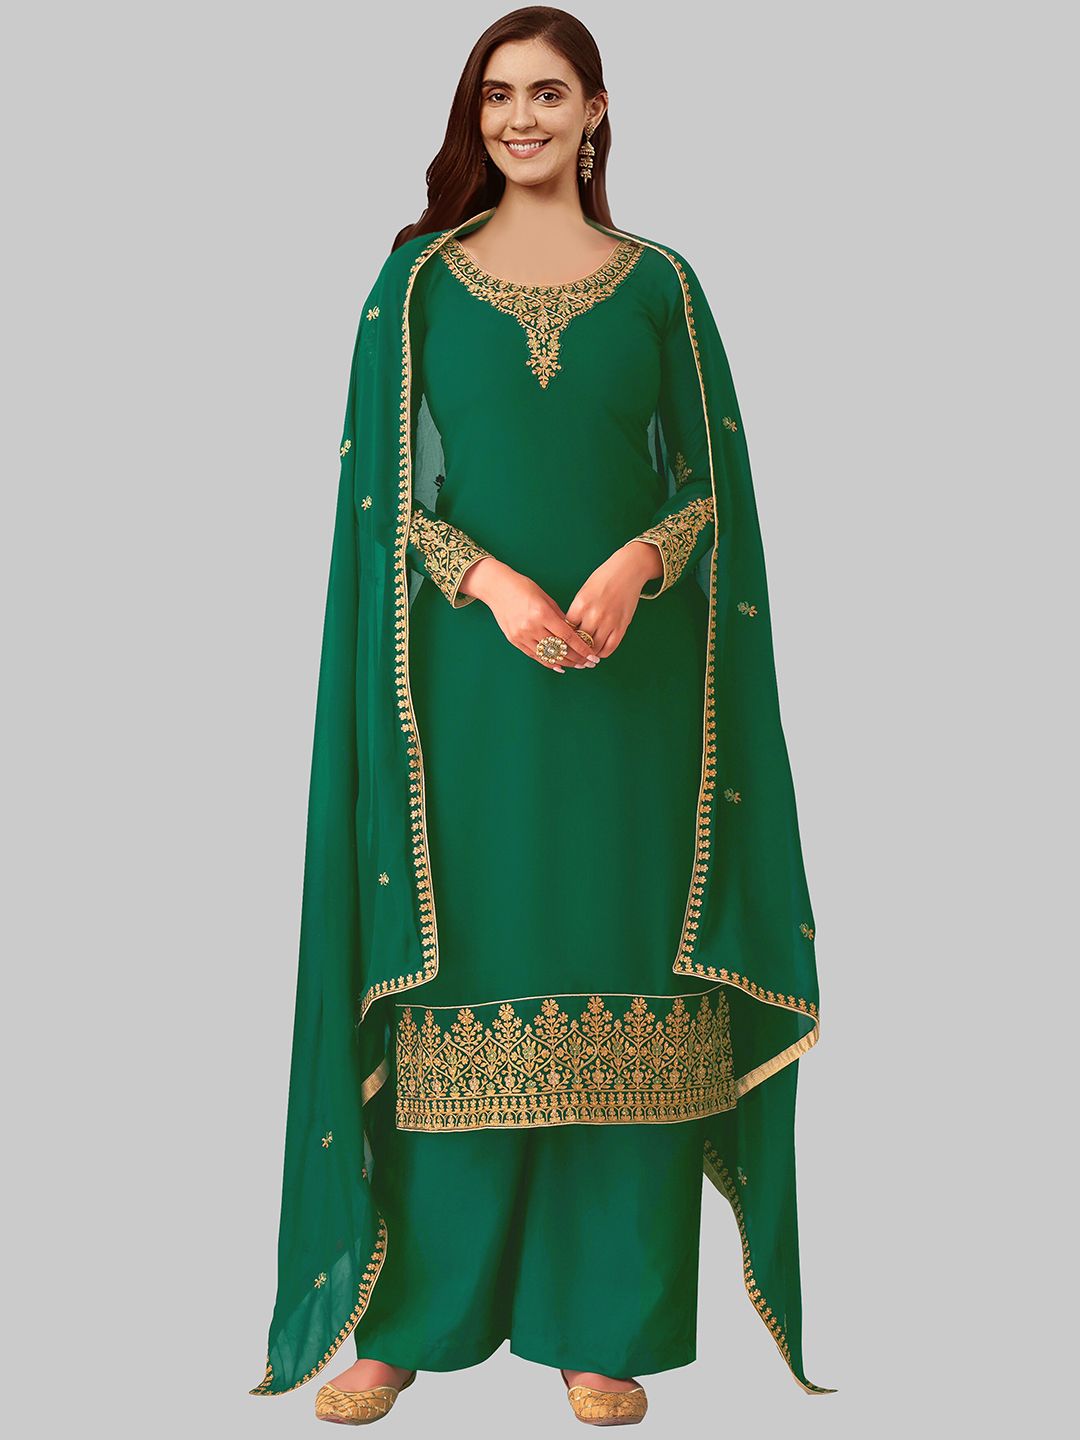 Fashionuma Green & Gold-Toned Semi-Stitched Dress Material Price in India